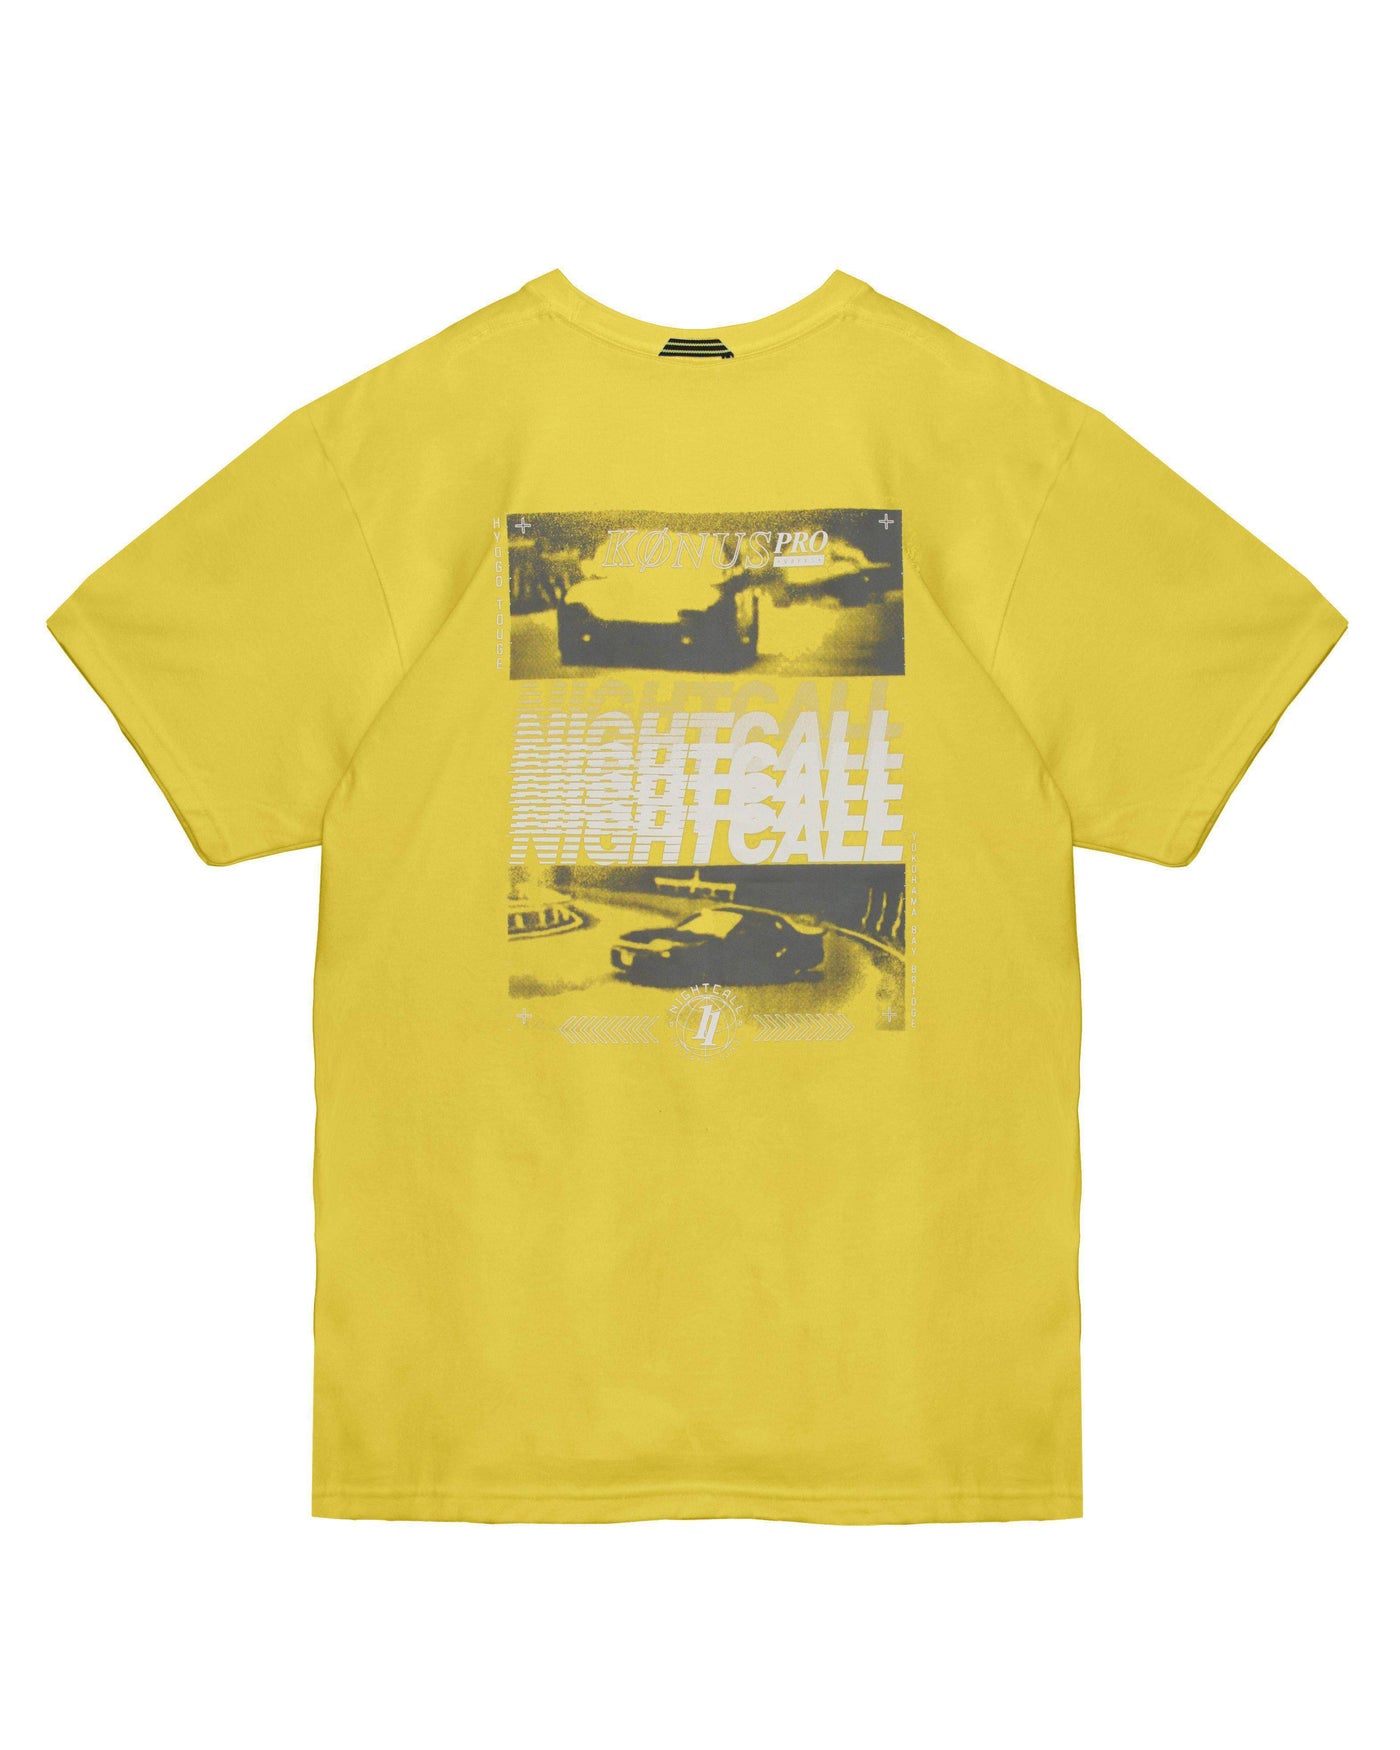 Konus Men's Graphic Tee in Yellow by Shop at Konus